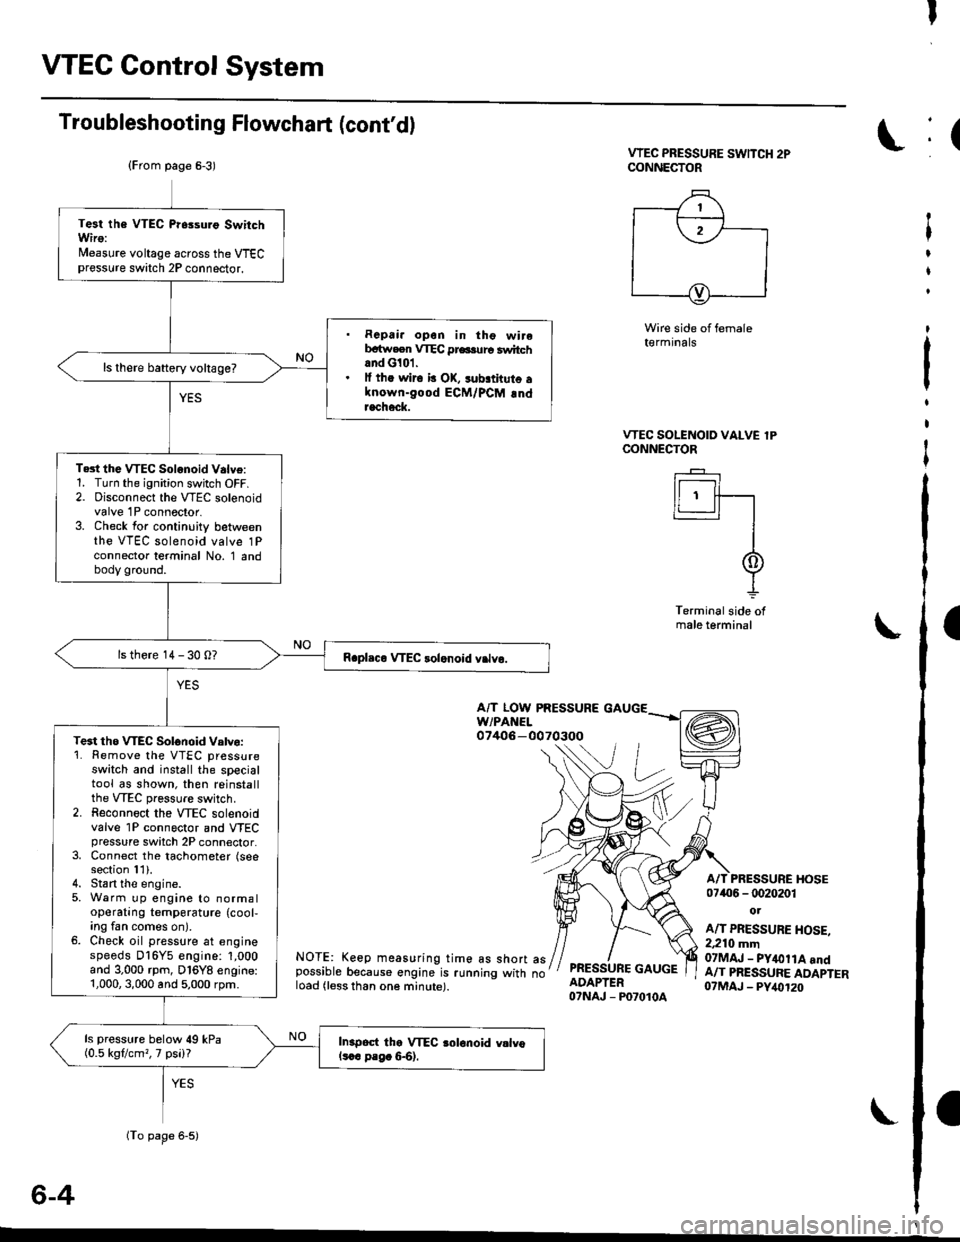 HONDA CIVIC 1998 6.G User Guide I
VTEC Control System
Troubleshooting Flowchart (contd)
VTEC PRESSURE SwlTCH 2PCONNECTOR
Wire side of female(€rmrnats
VTEC SOLENOID VALVE lPCONNECTOR
I r----t I
ll  ff---r�-�1
I
I
-L
Terminal s